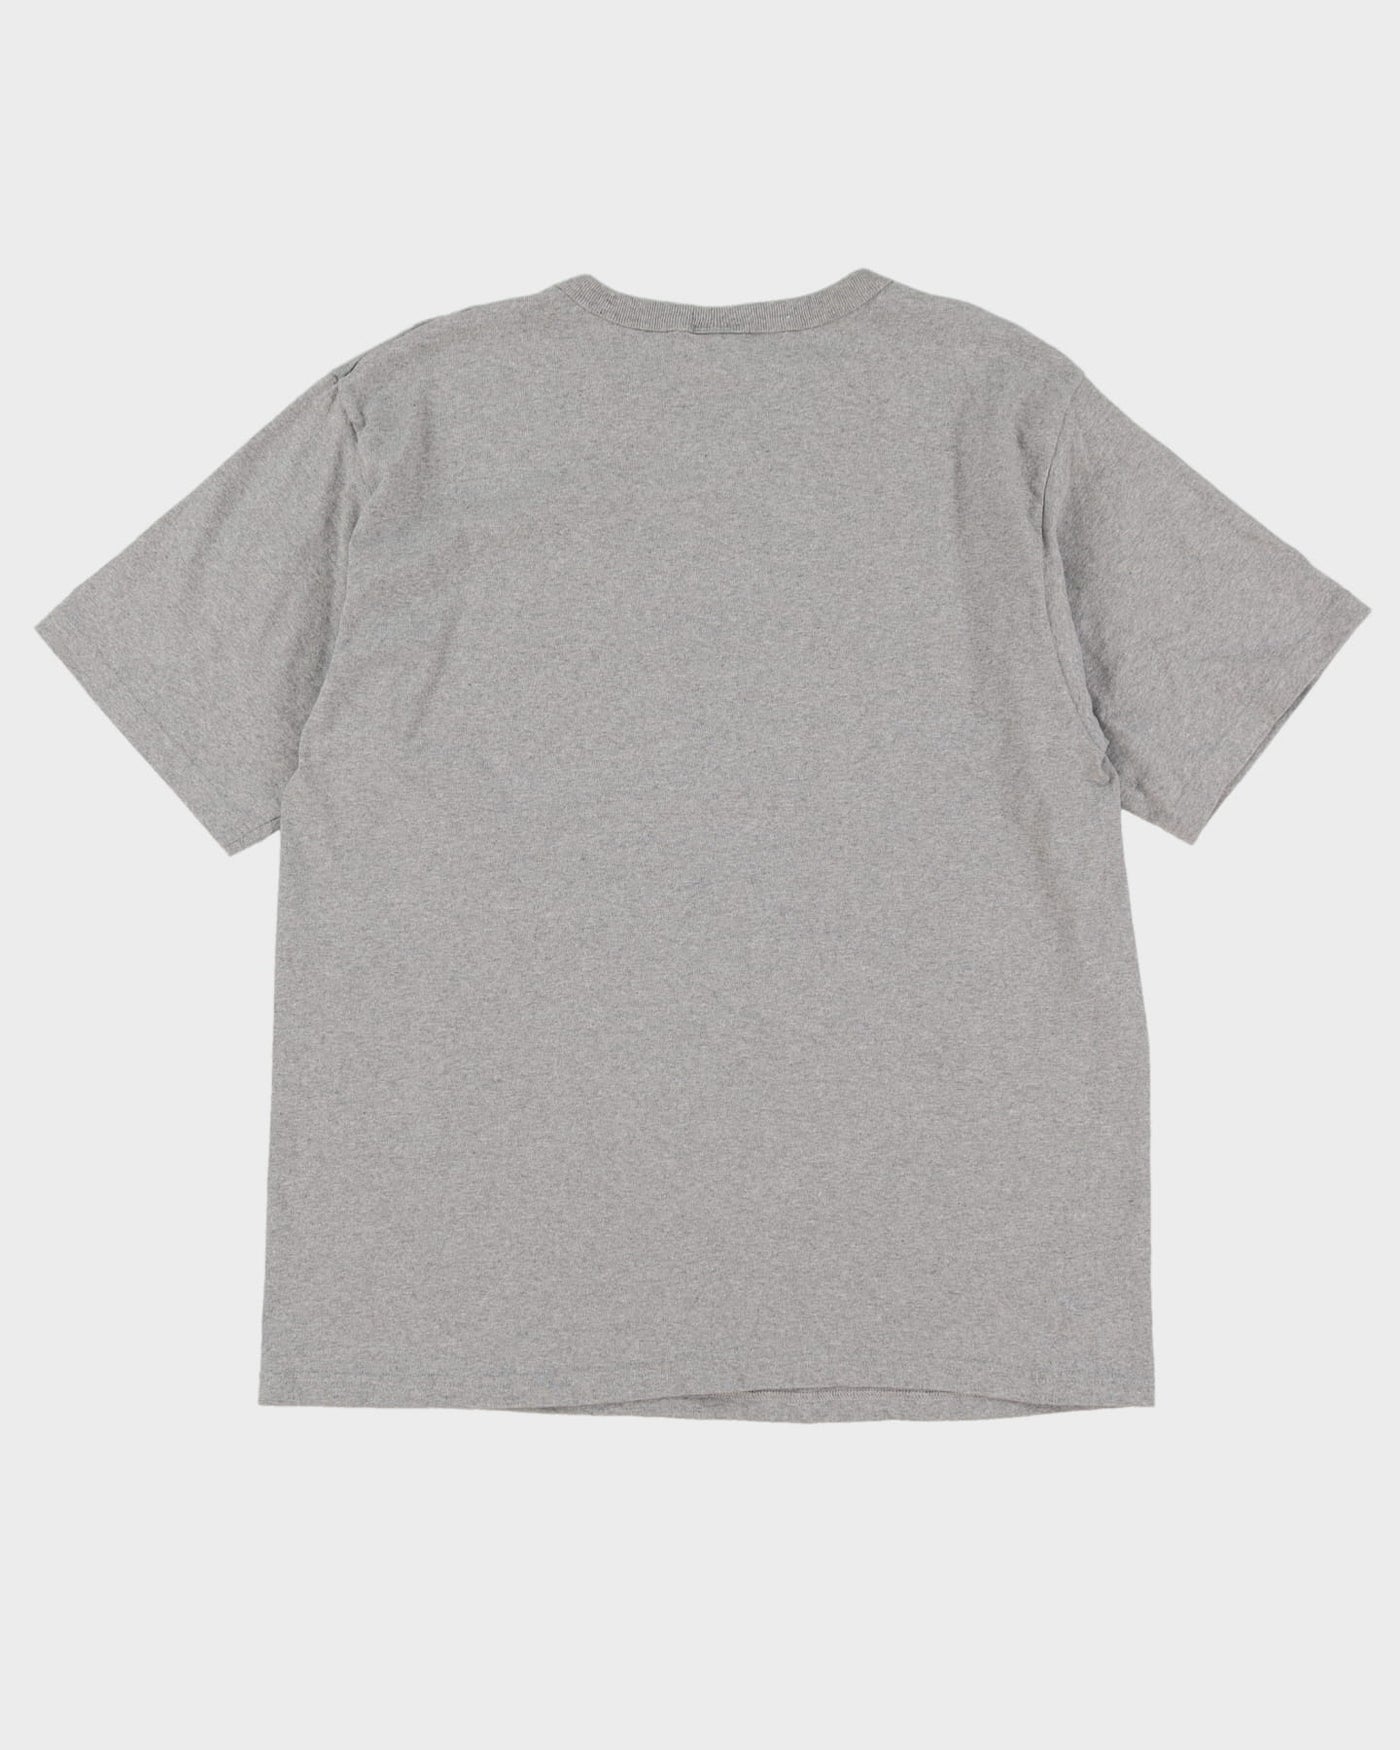 Champion Grey T-Shirt - XXL